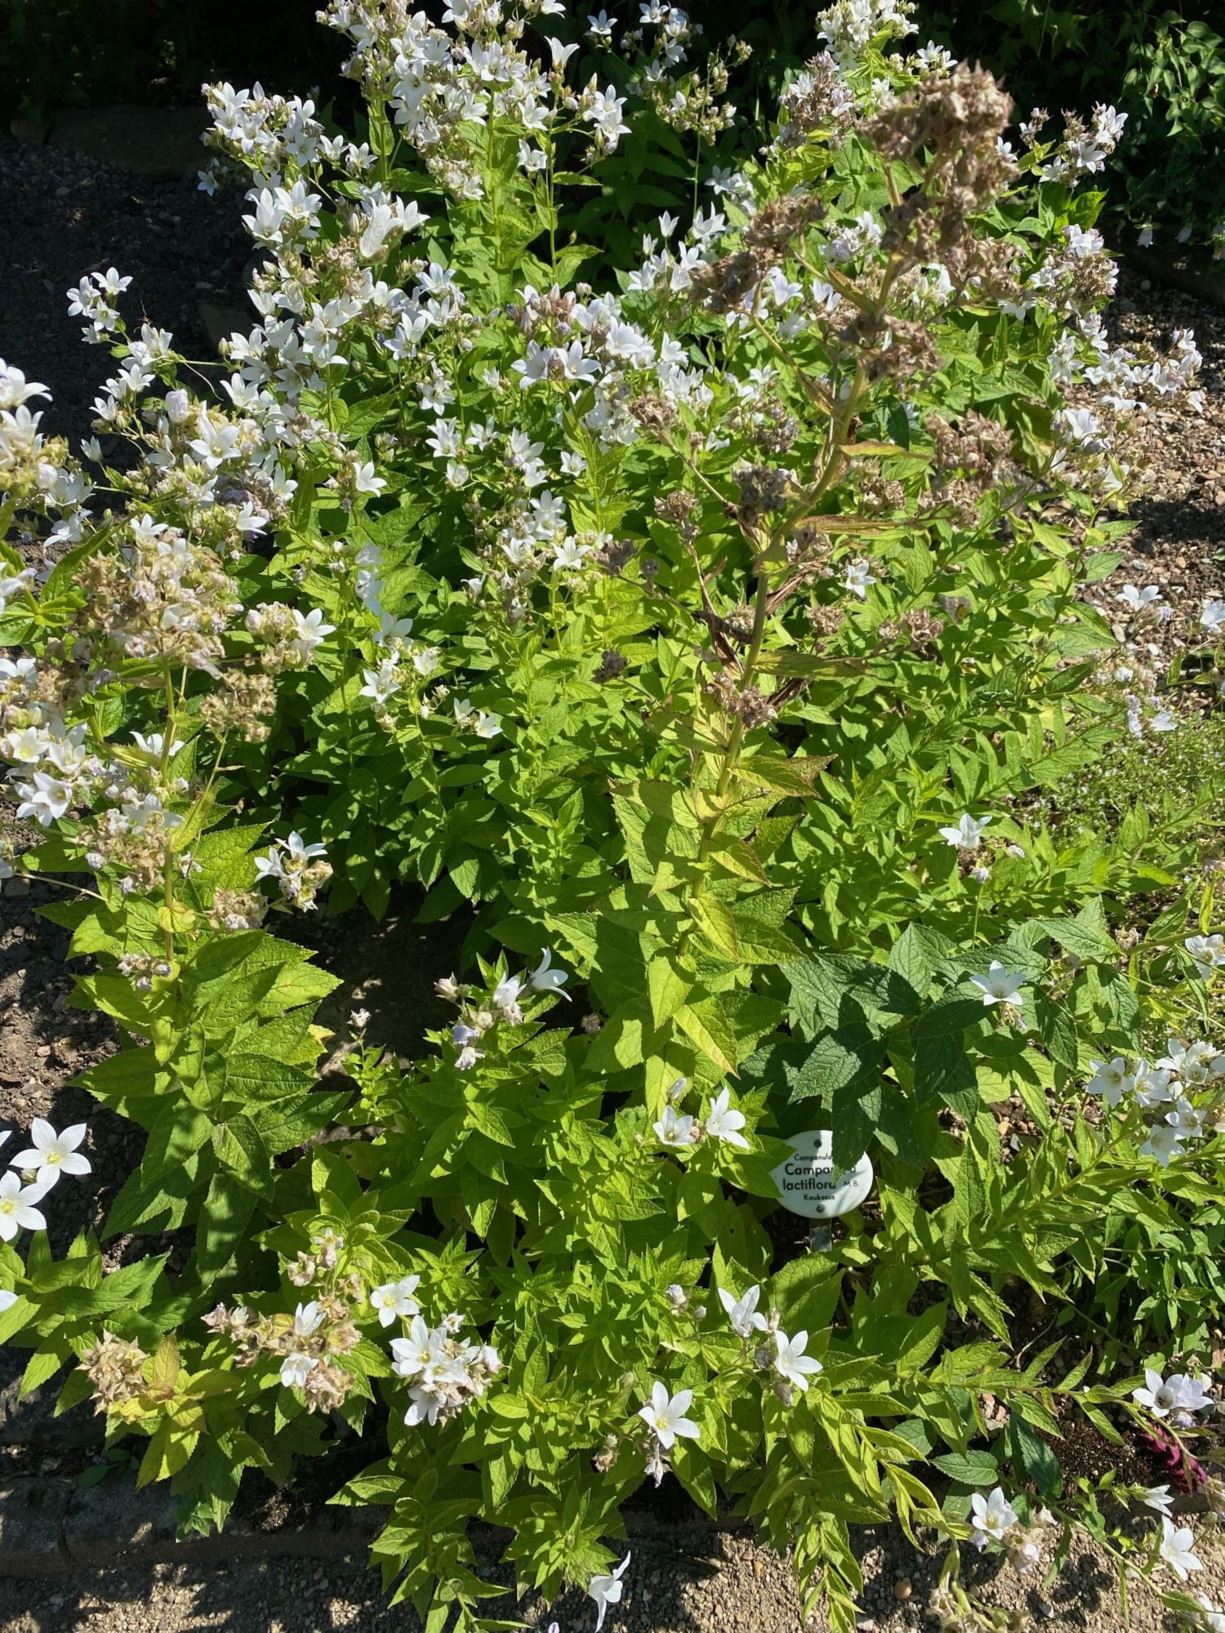 Campanula lactiflora - Riesen-Glockenblume, milky bellflower